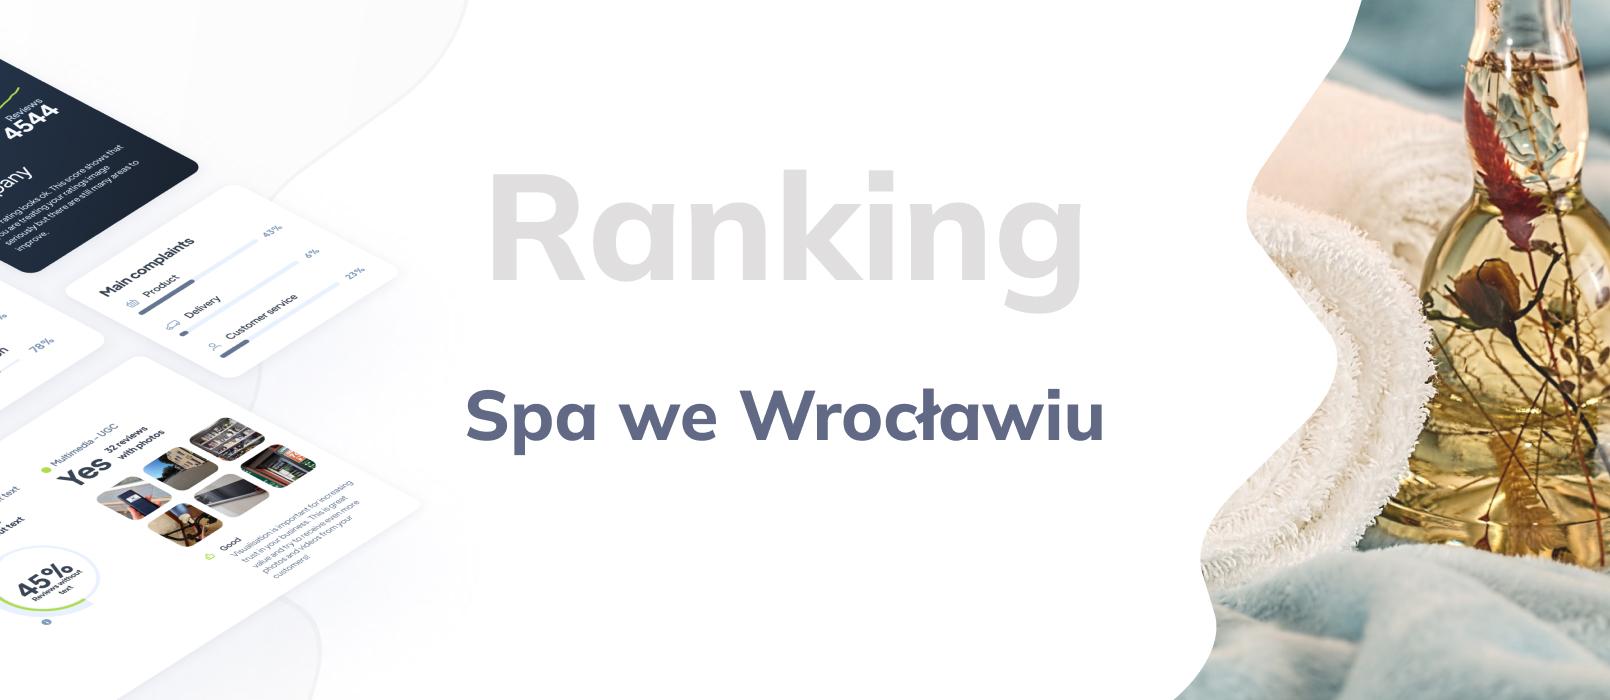 Spa we Wrocławiu - ranking TOP 10